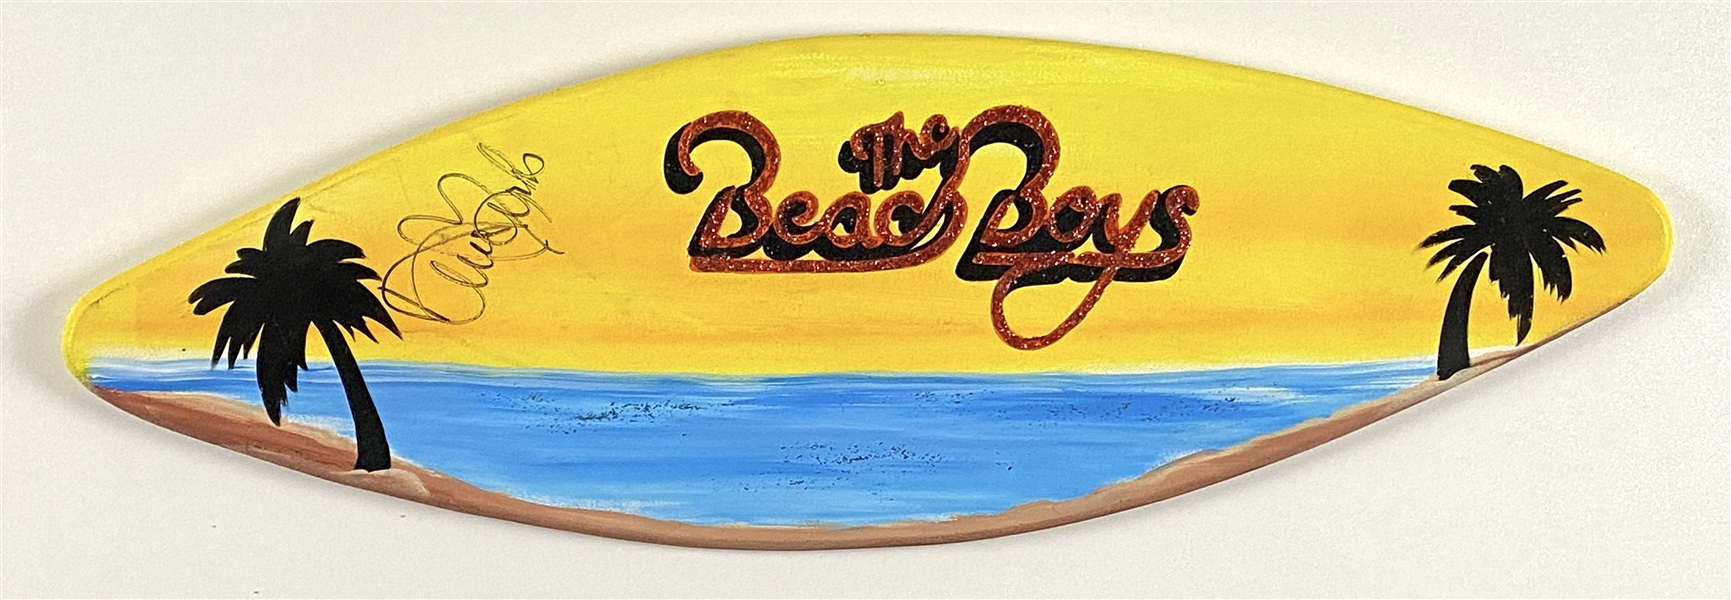 Beach Boys: David Marks Signed Wooden 24” x 8” Mini Surfboard  (Beckett/BAS Guaranteed)